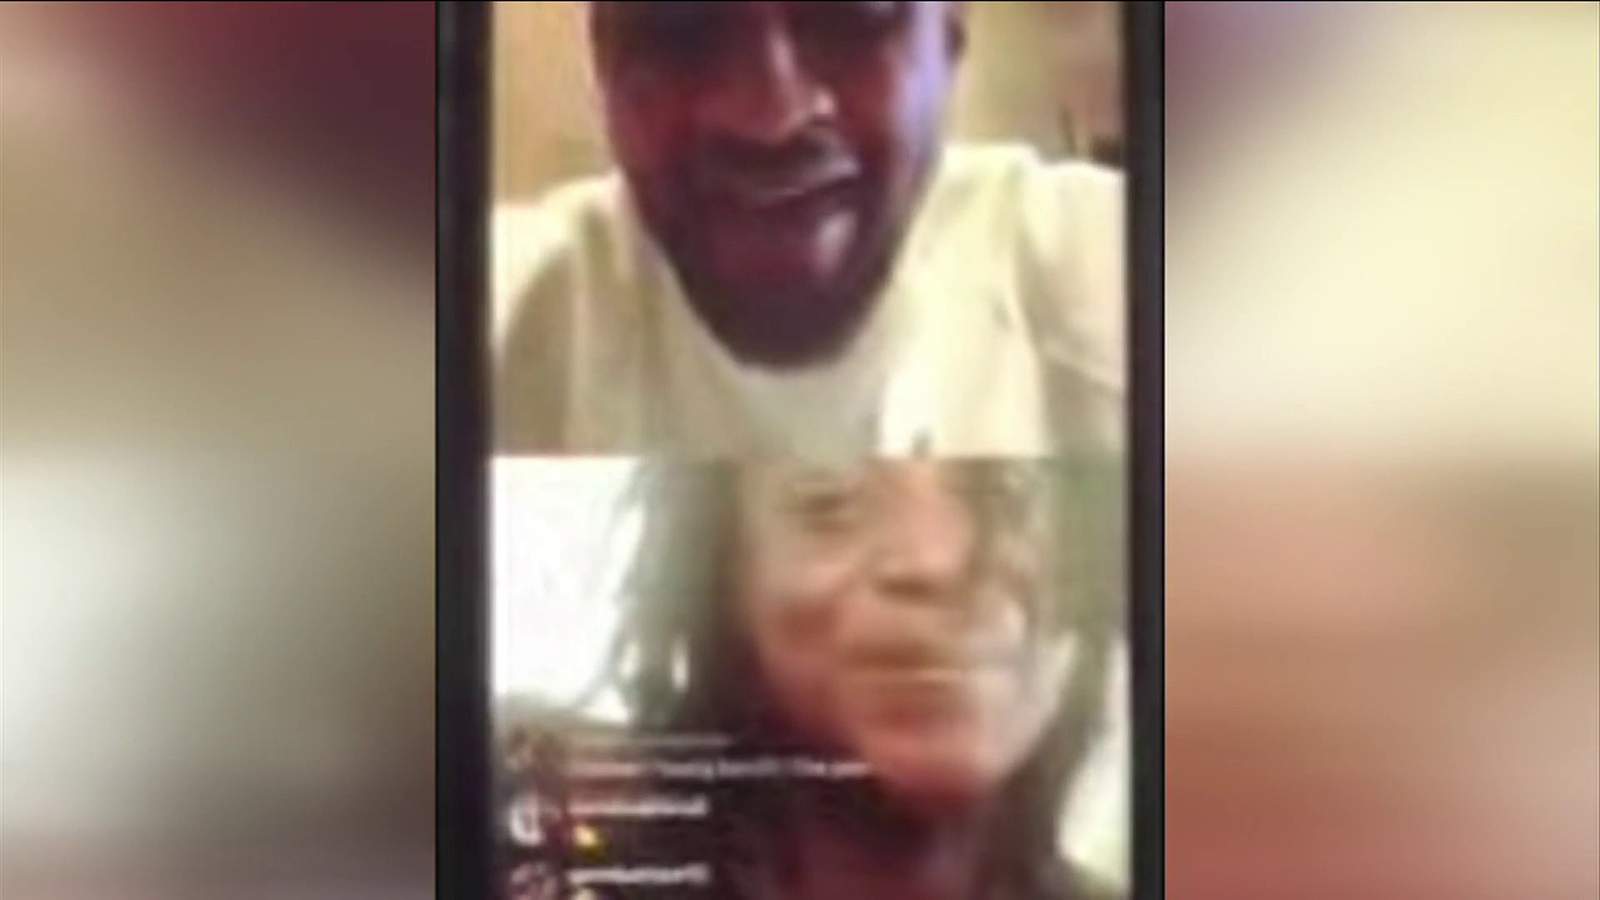 Pop superstar Usher serenades Jacksonville healthcare worker to lift her spirits